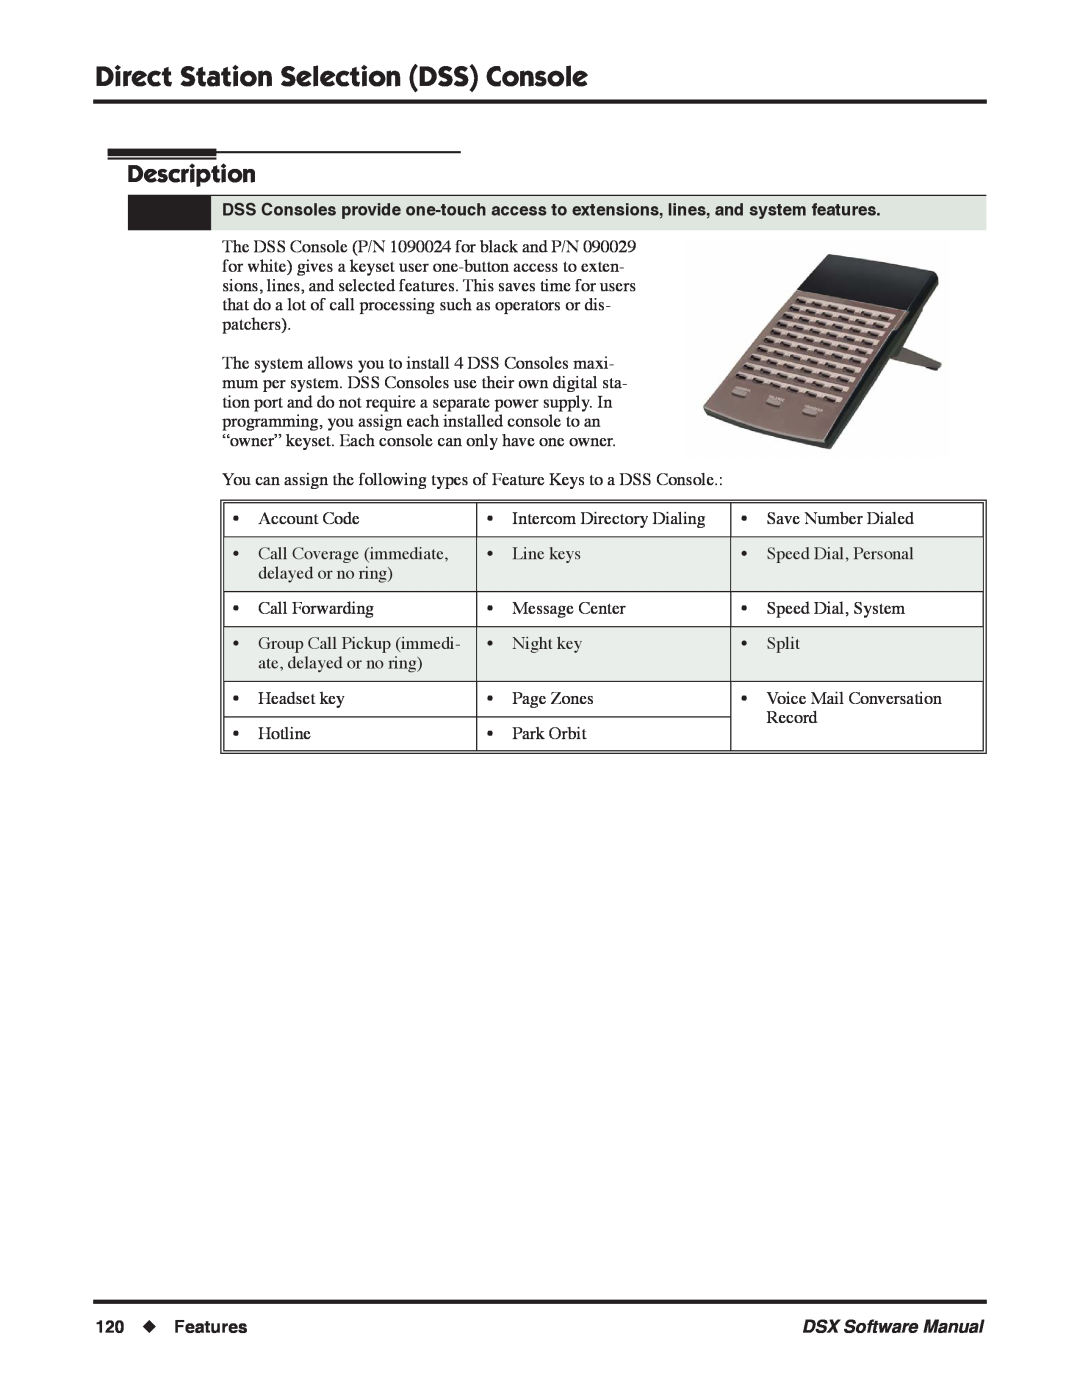 NEC N 1093100, P software manual Direct Station Selection DSS Console, Description, Features, DSX Software Manual 